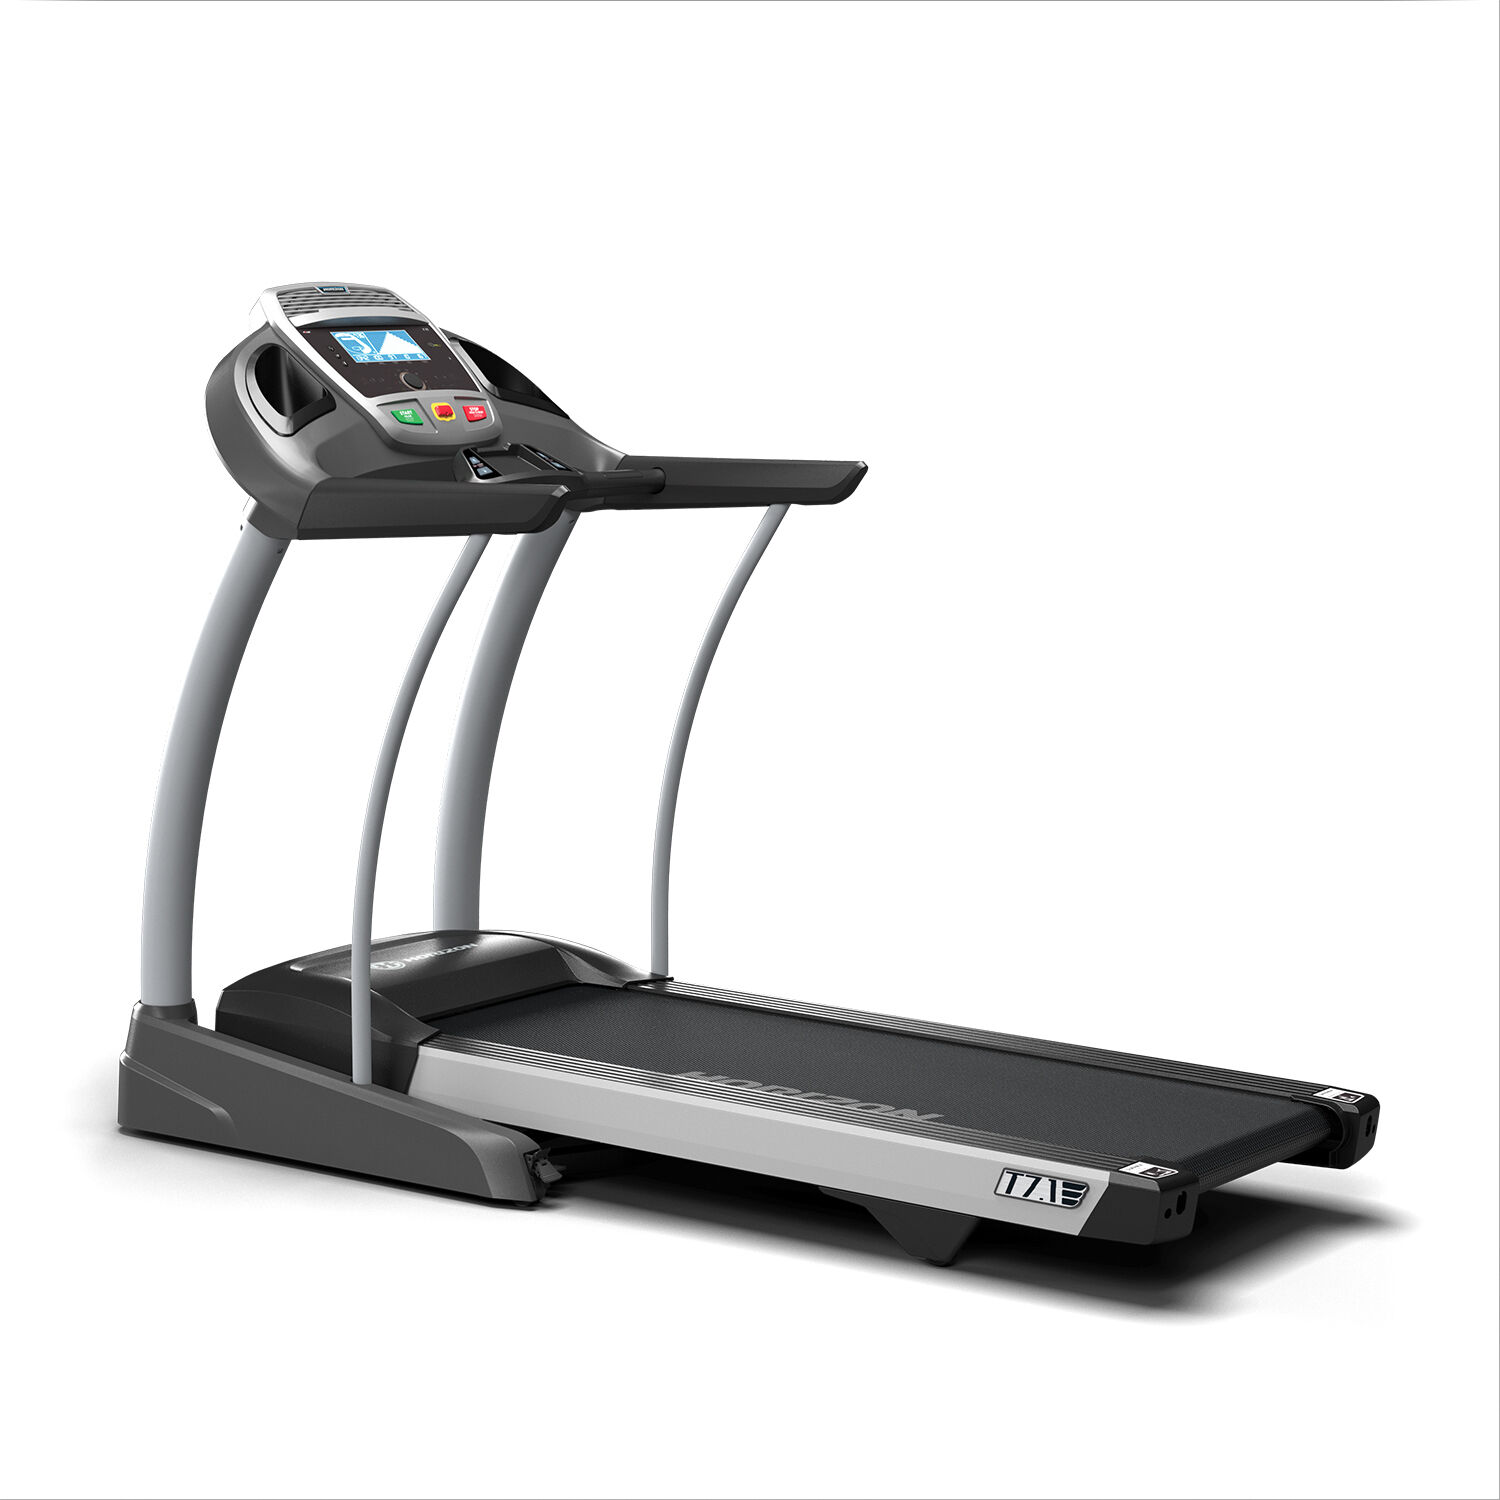 HORIZON FITNESS Horizon T 7.1 Elite Treadmill with Free Installation, L210 x W94.5 x H150cm